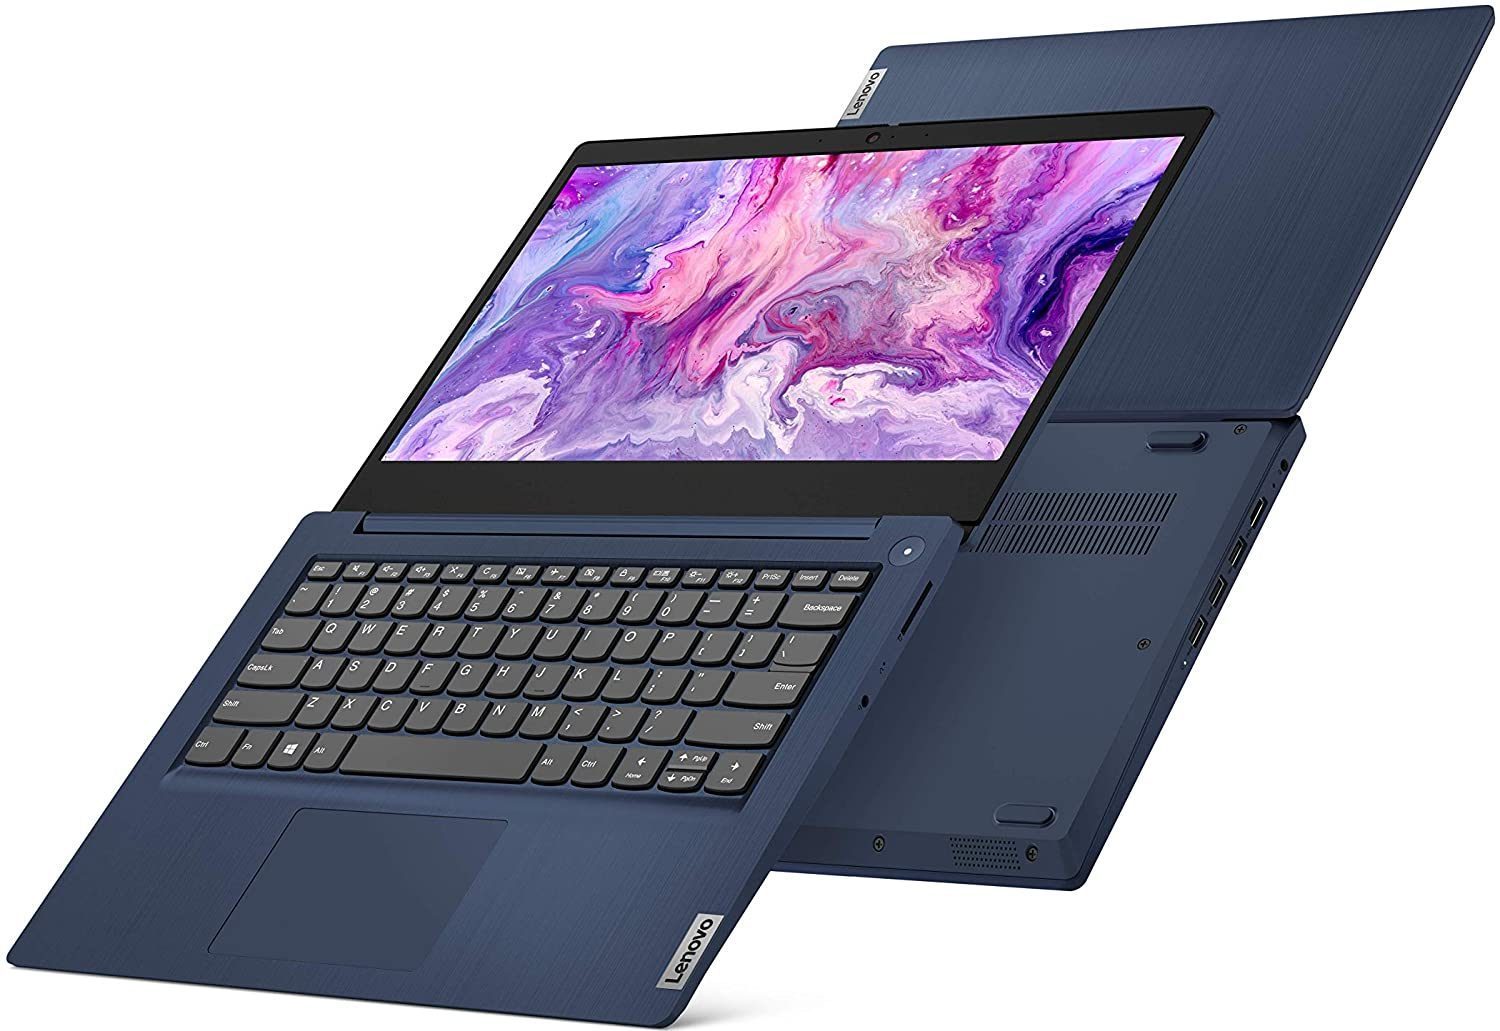 Nâng cấp SSD, RAM cho Laptop Lenovo Ideapad 3 (14 inch) 